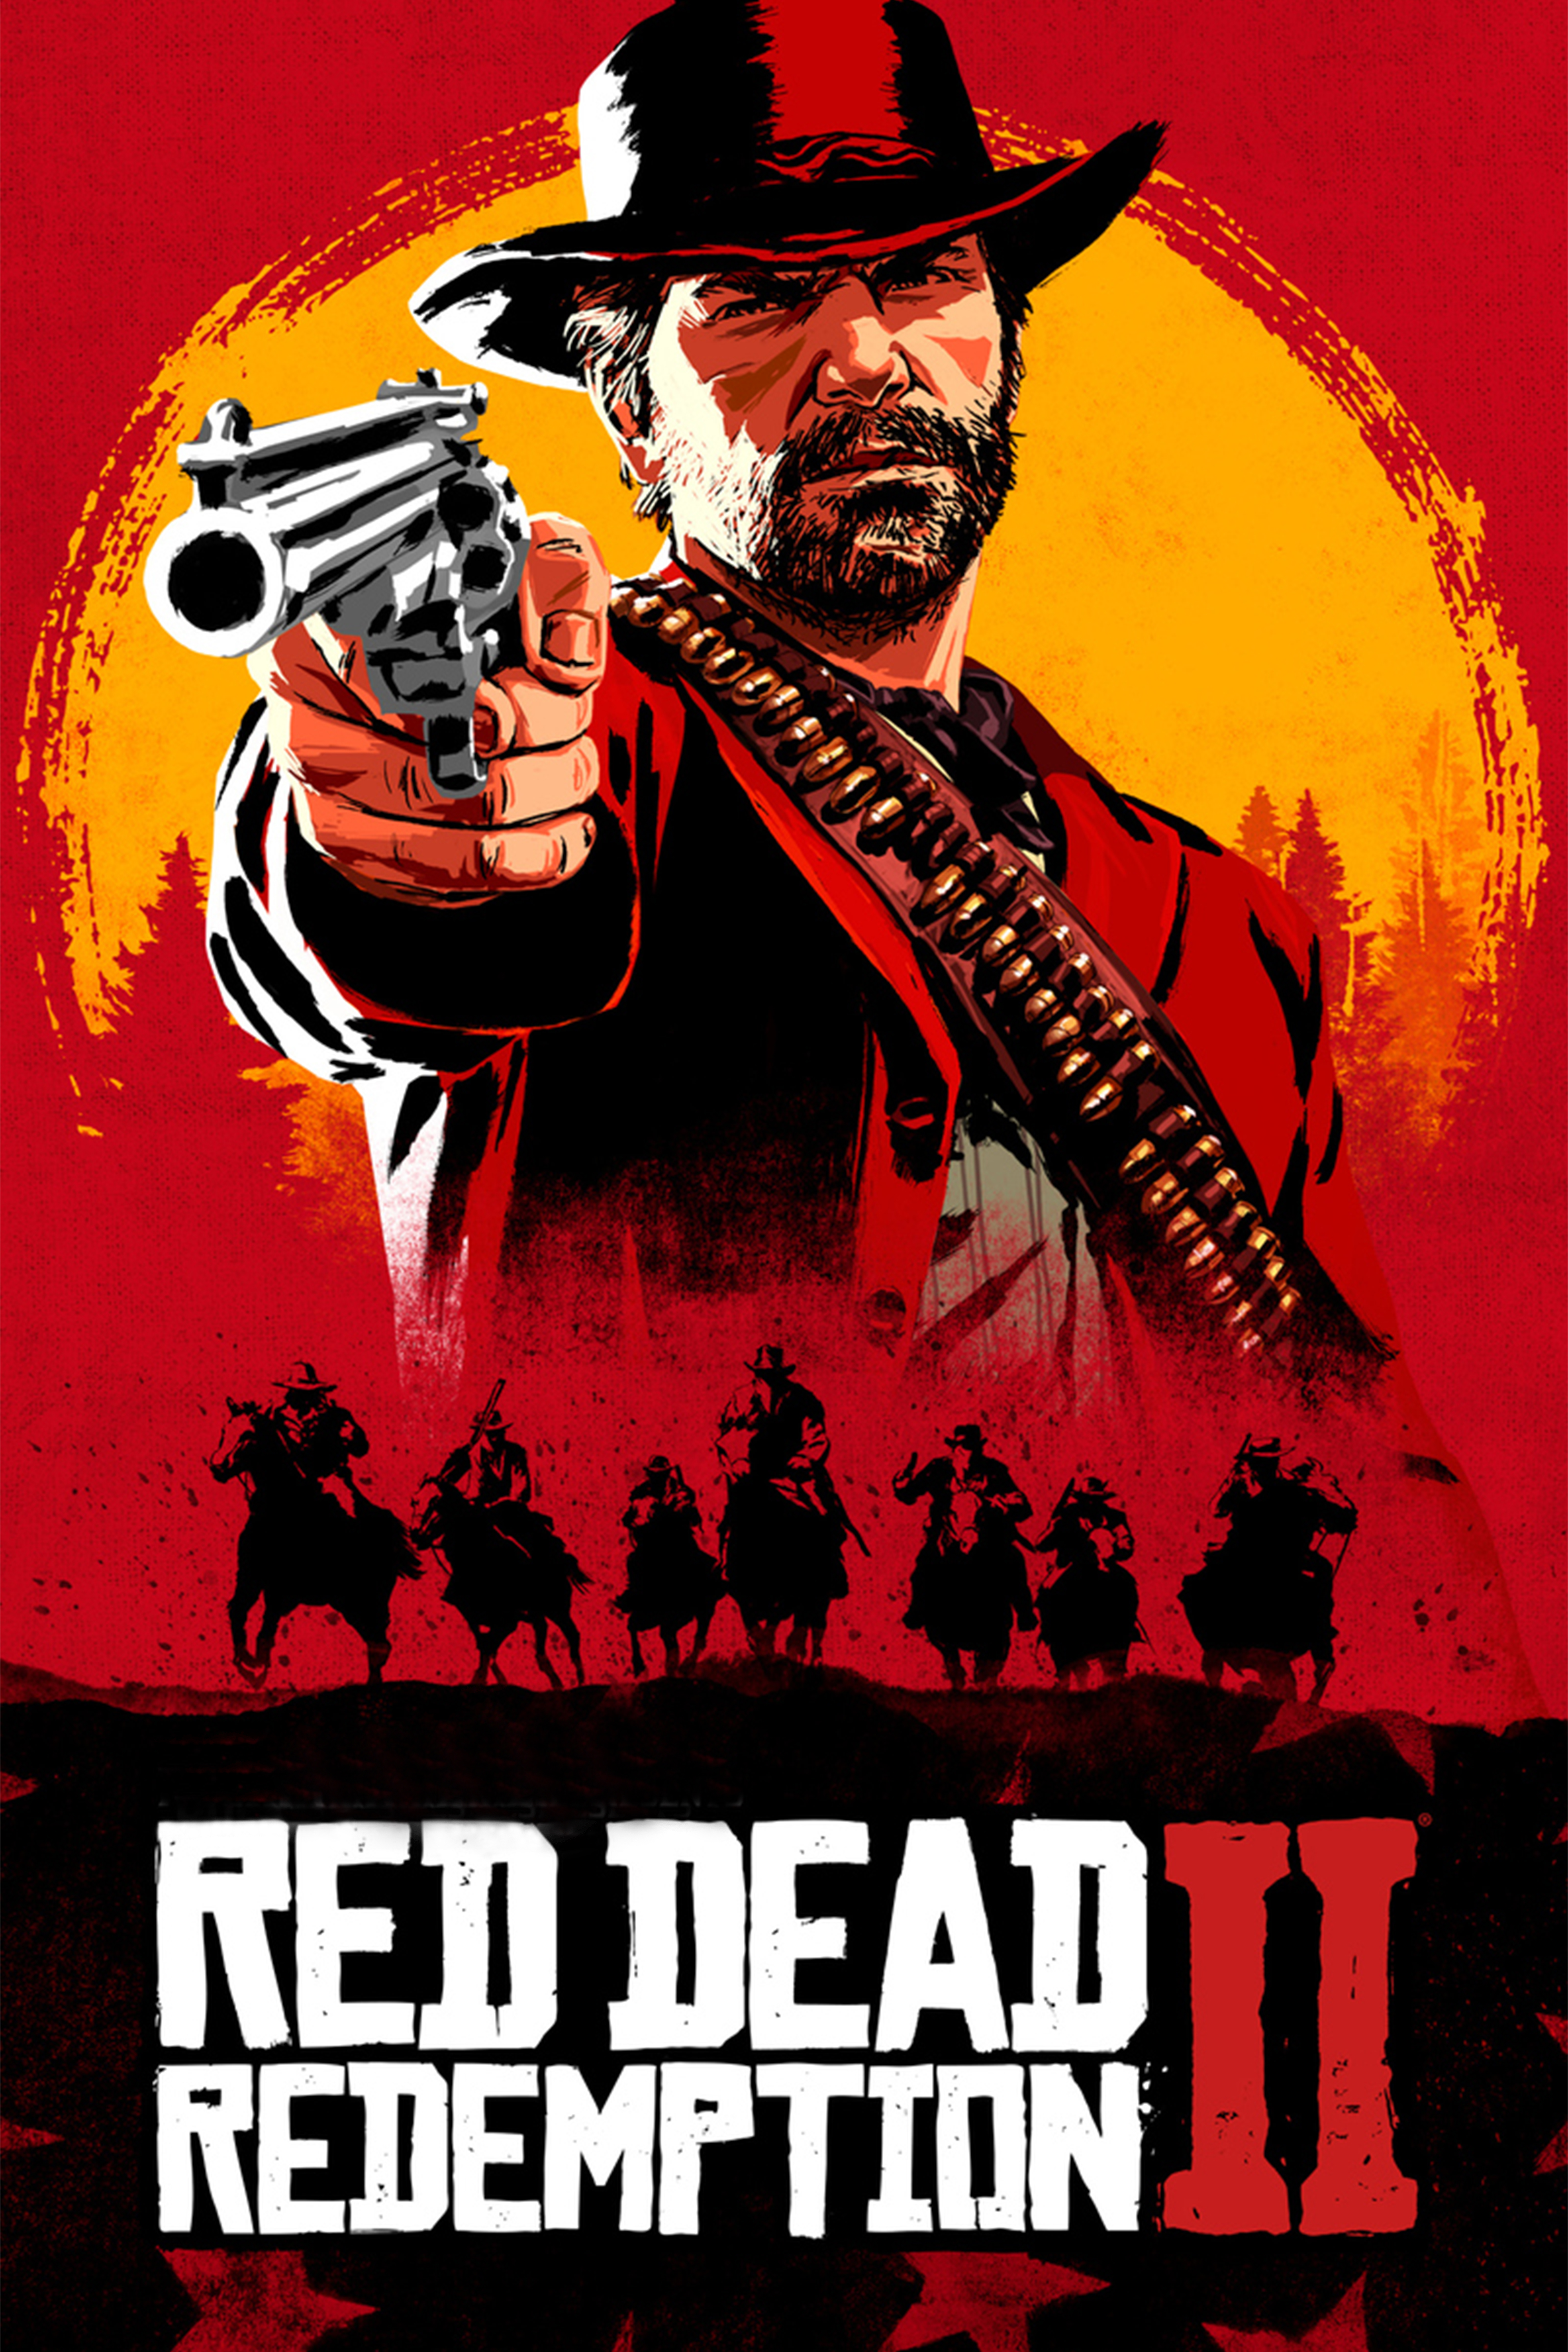 Red redemption 2 купить стим. Red Dead Redemption Постер. Red Dead Redemption 2. Ред деад редемптион 2 плакат. Red Dead Redemption 2 poster.